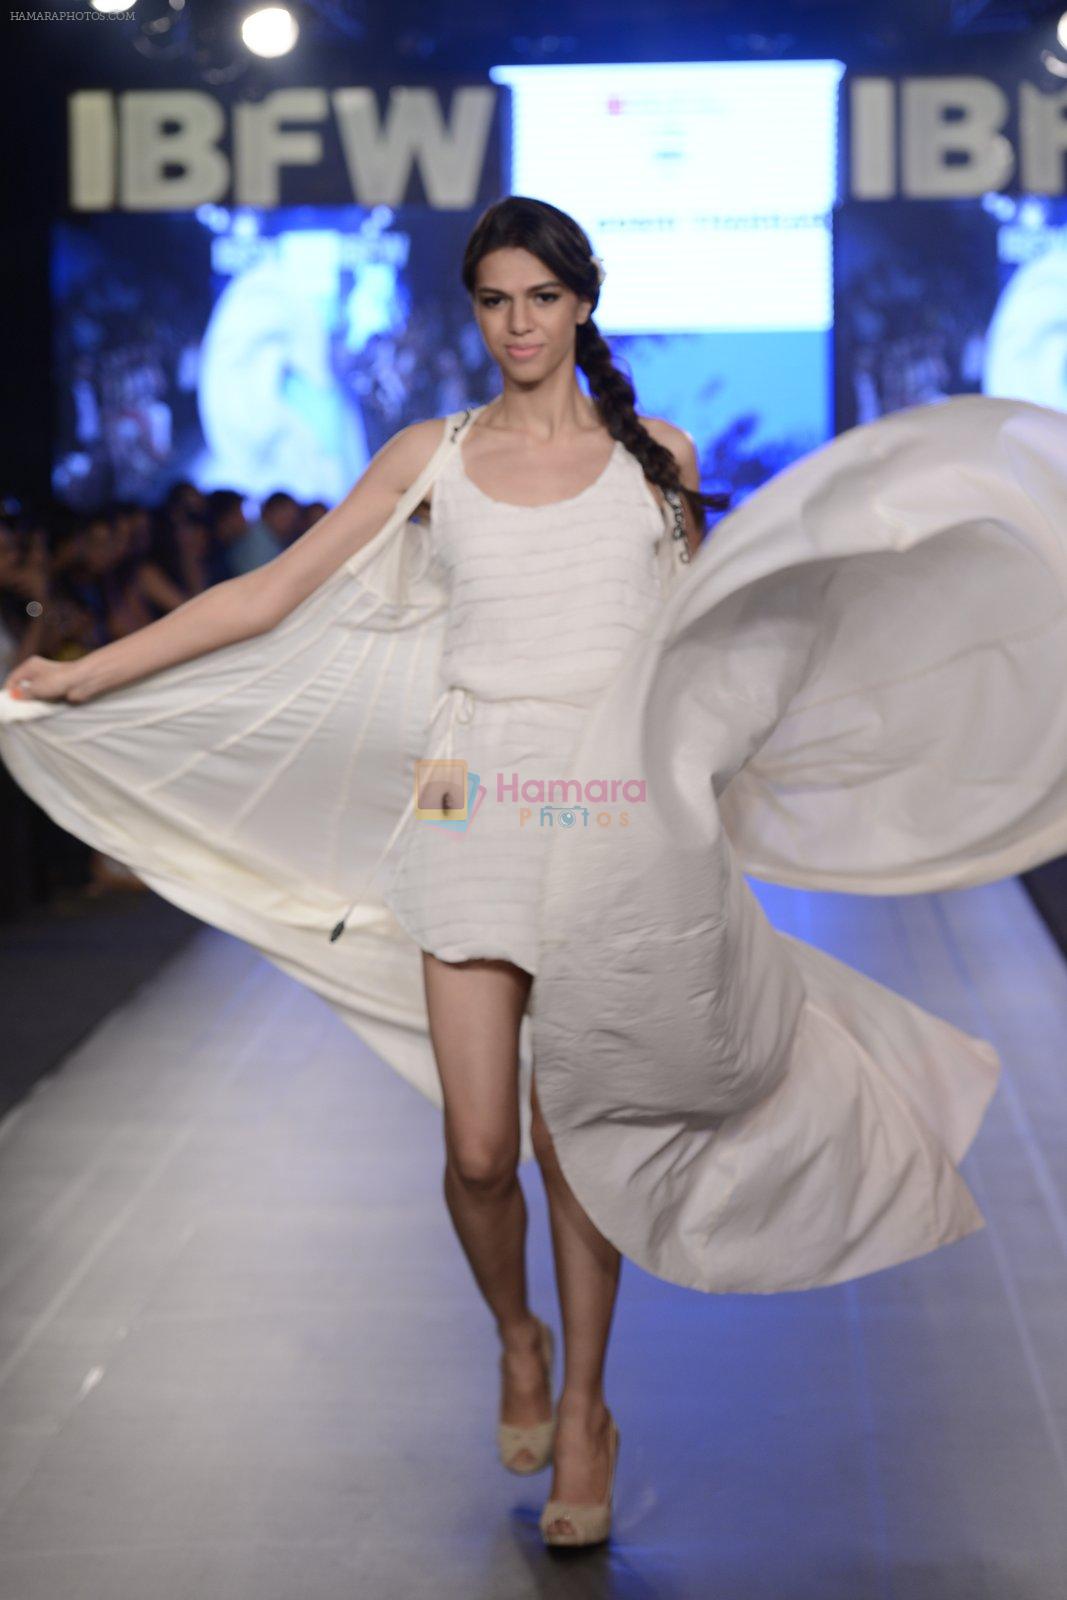 Model walk the ramp for Zeel Doshi Thakkar show on day 3 of Gionee India Beach Fashion Week on 31st Oct 2015